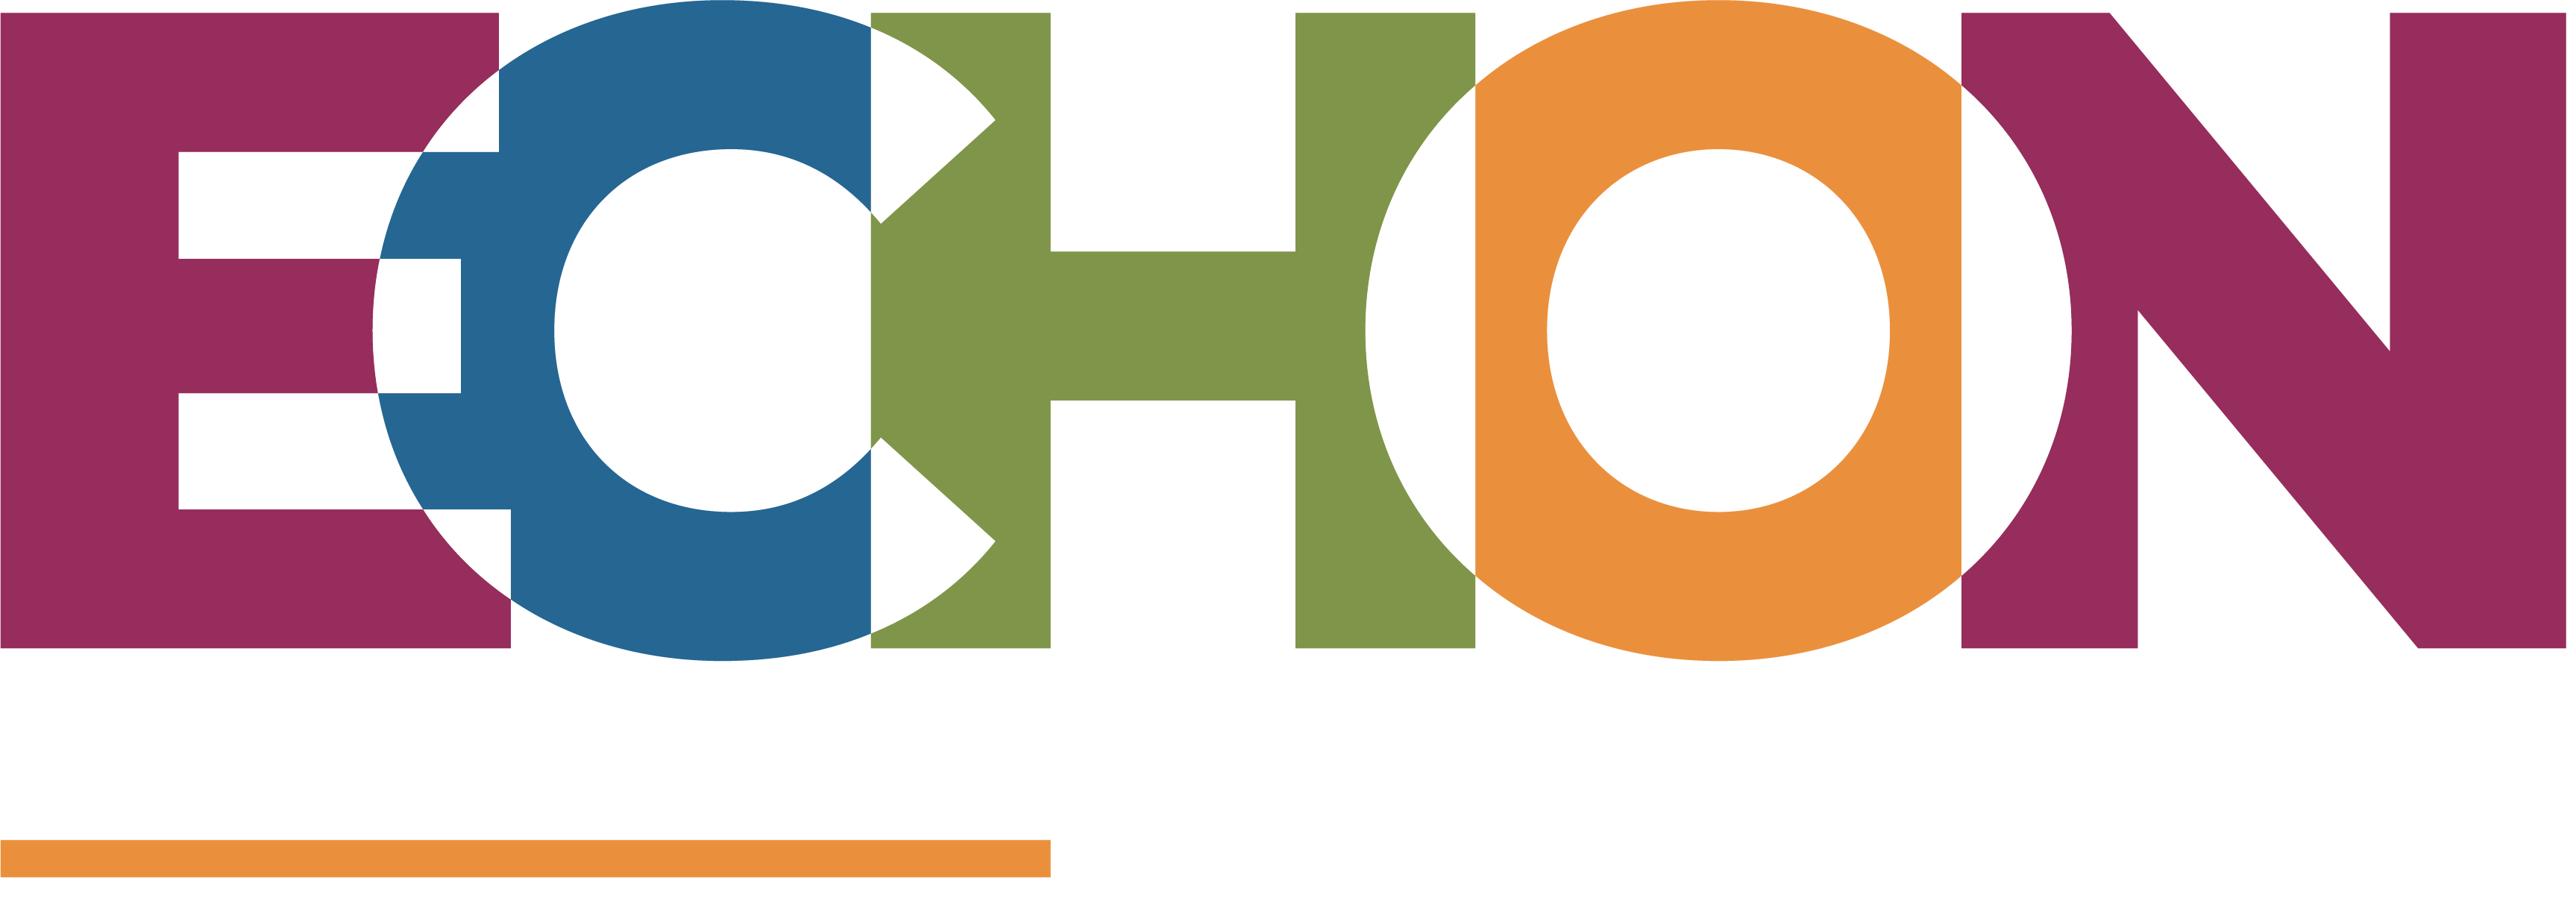 Echon – Digital Partner